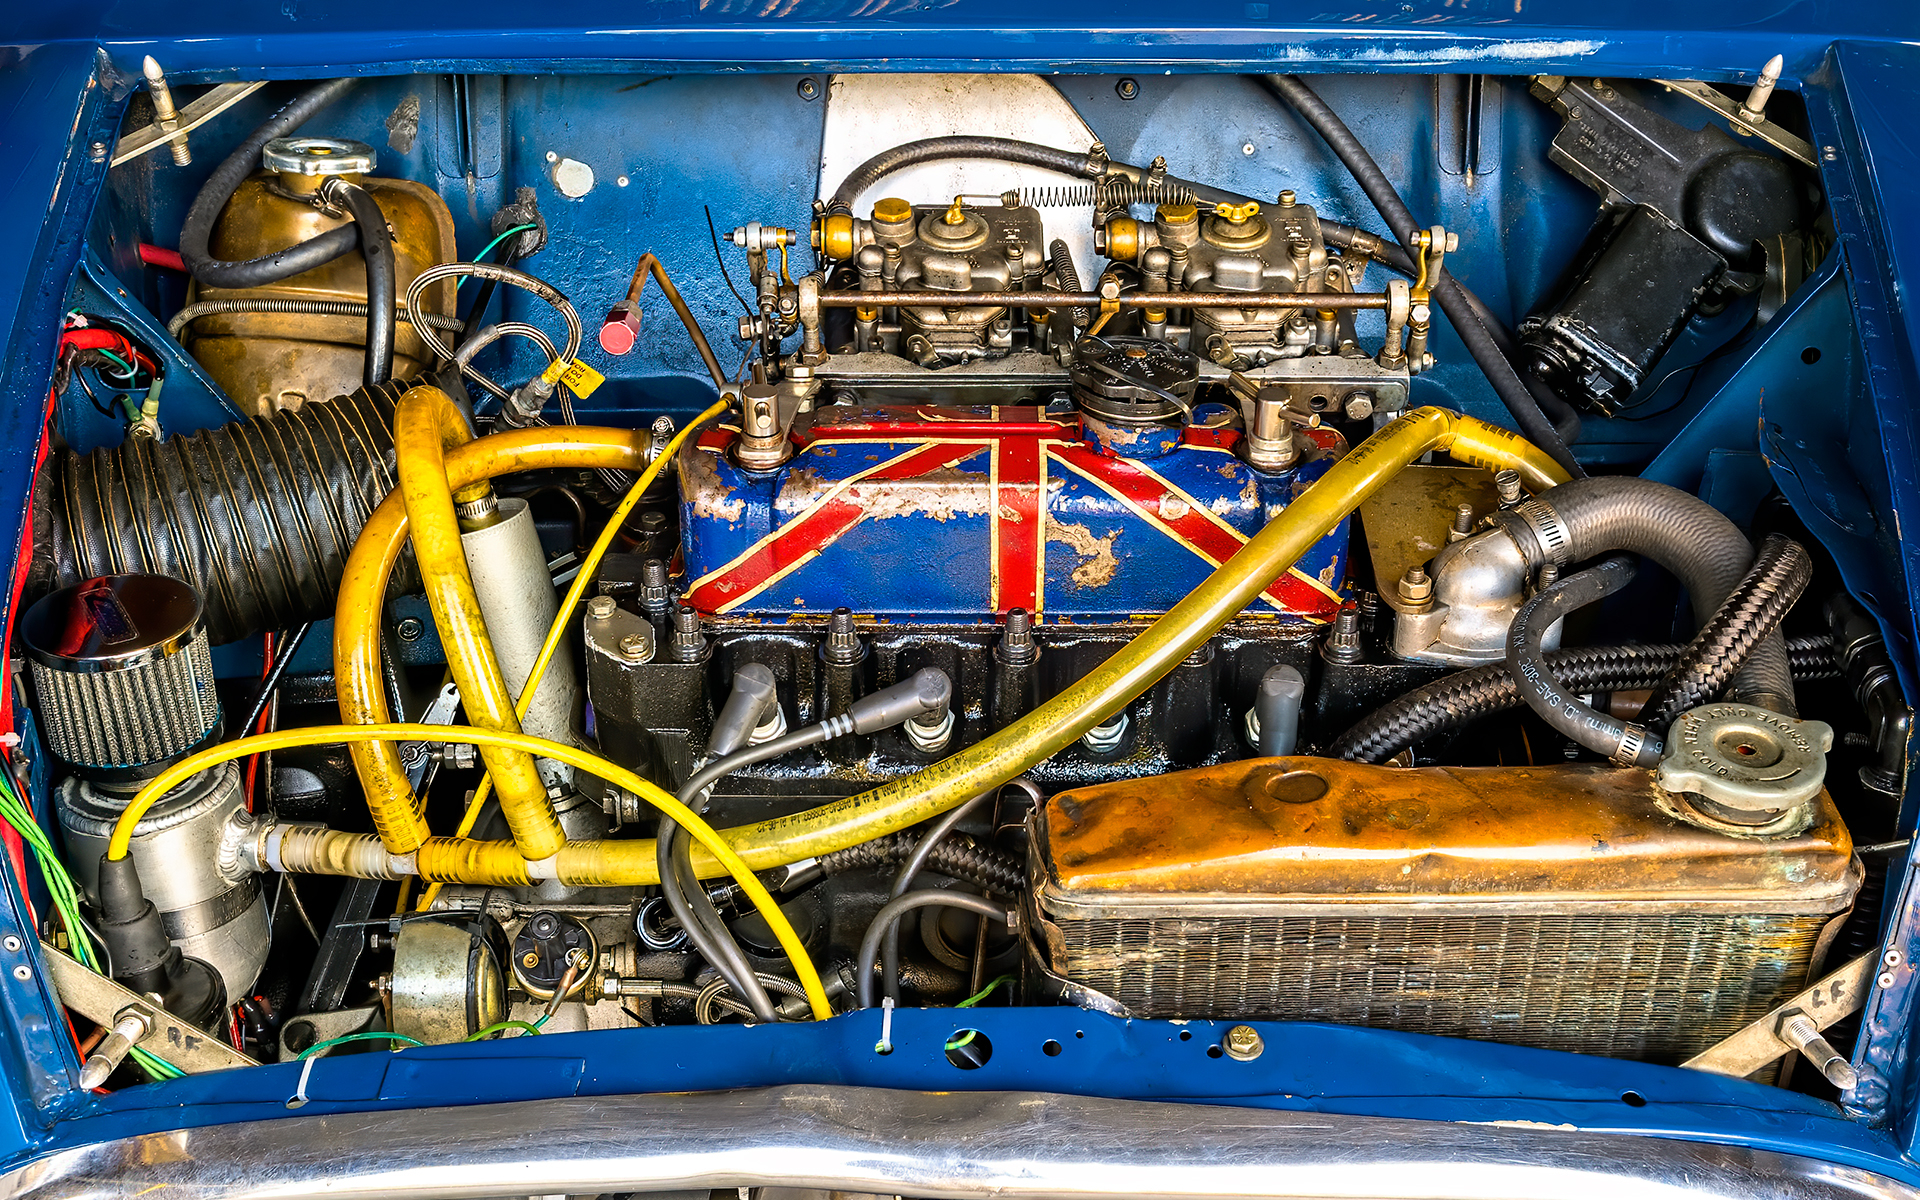 Mini Cooper Motor : Cars : Dan Sheehan Photographs - Fine Art Stock Photography